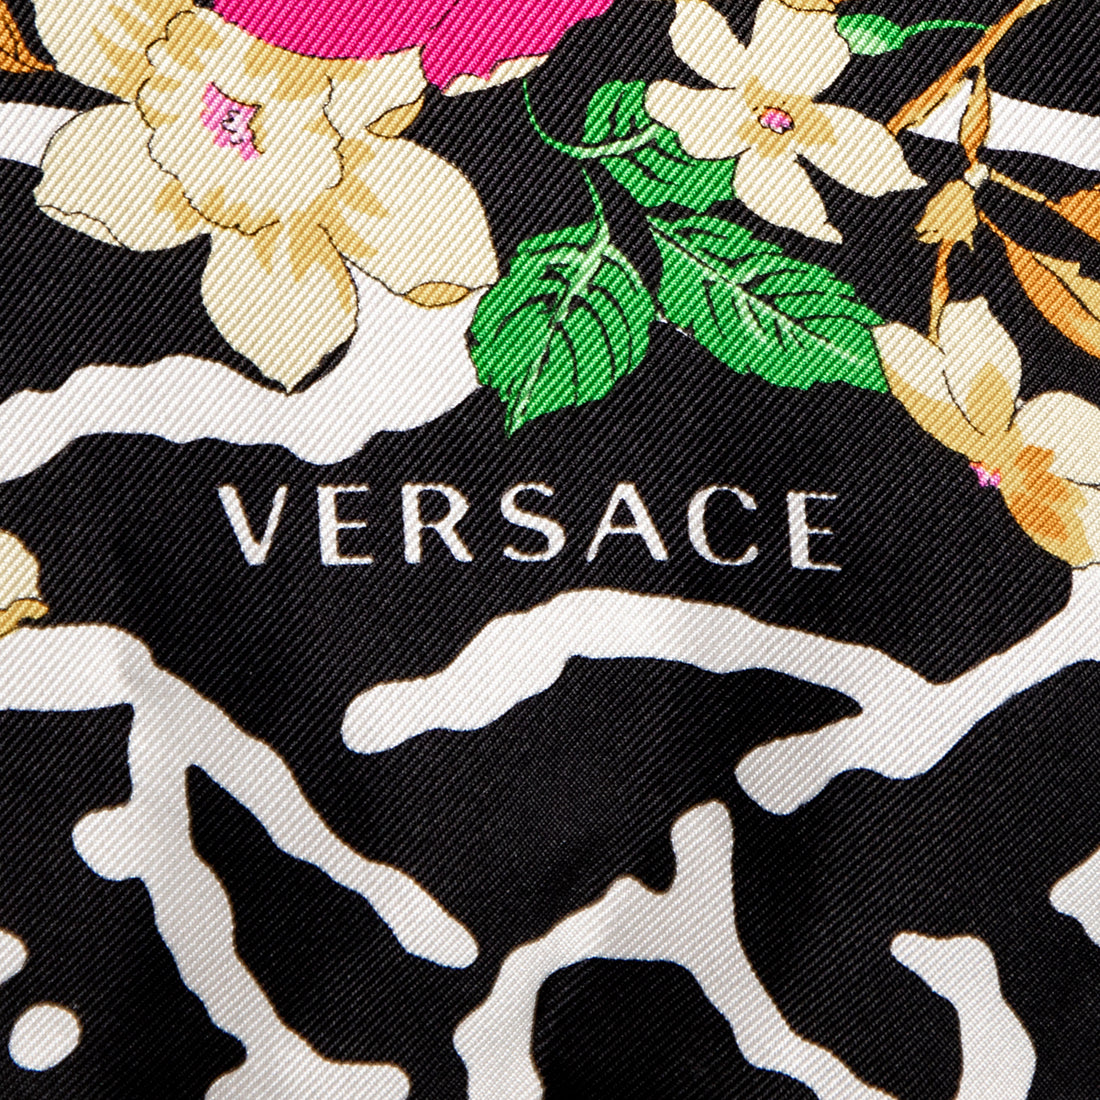 Versace silk scarf in floral leopard print